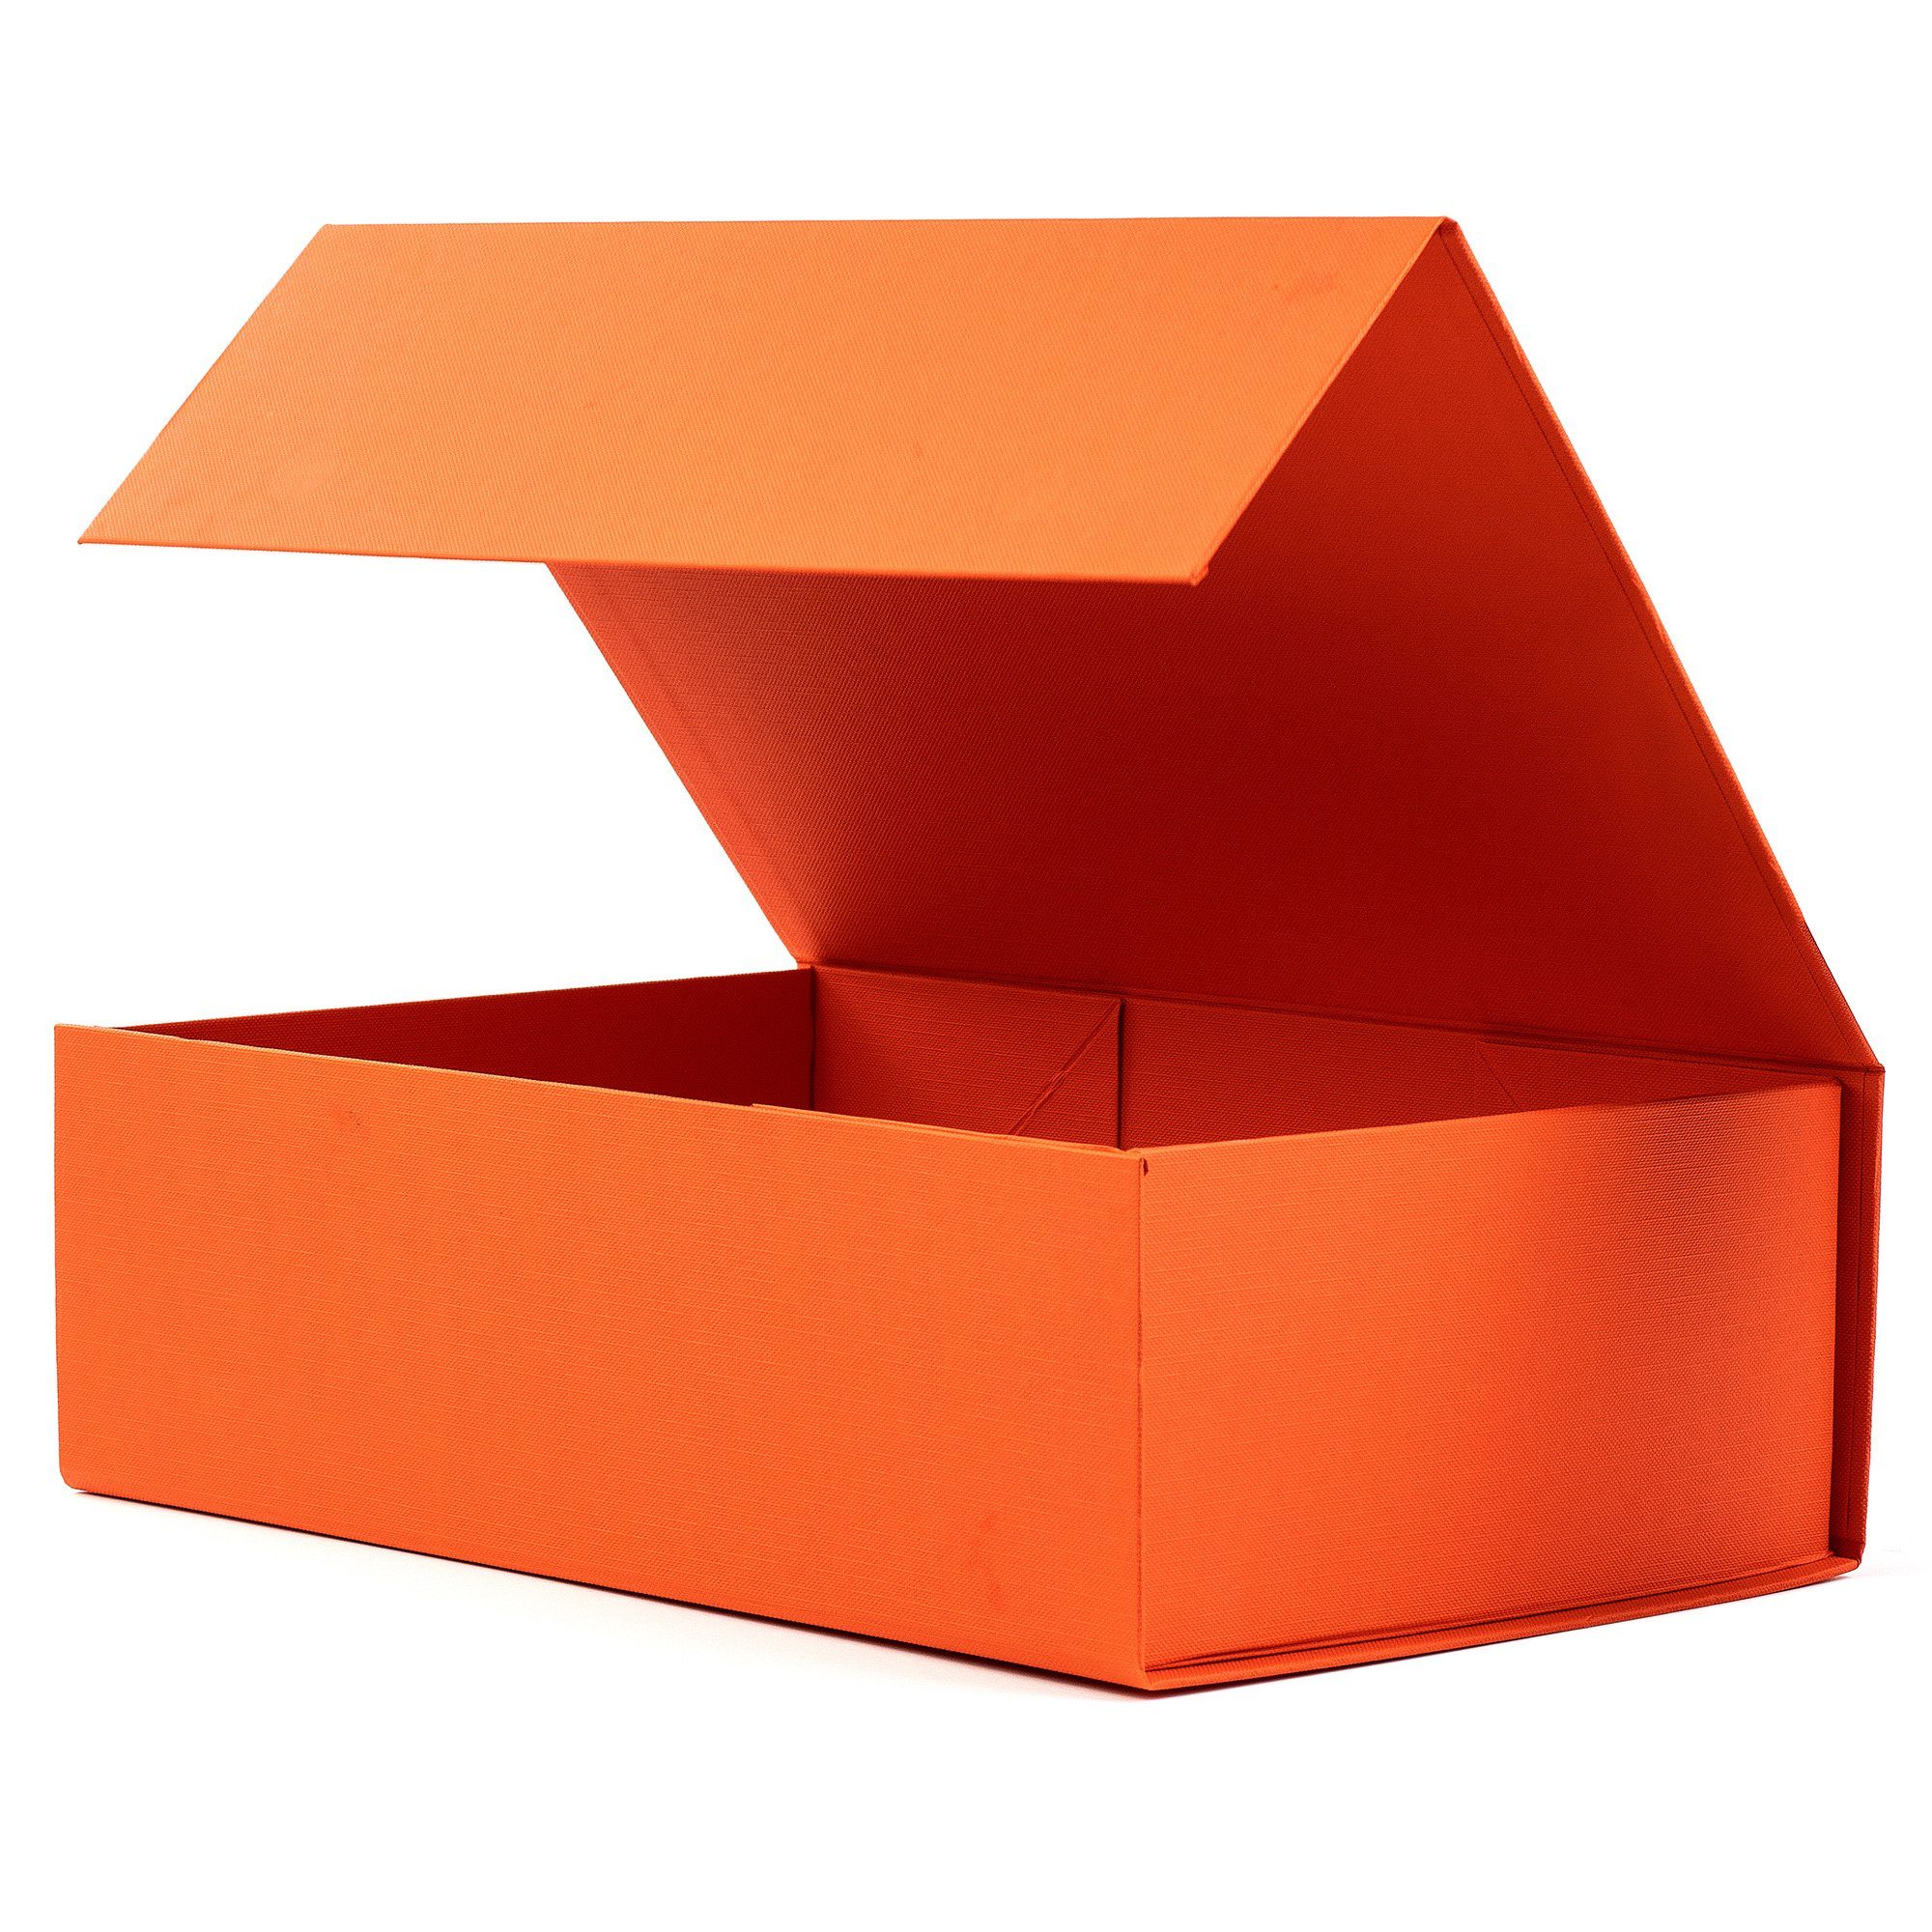 AdelDream Aufbewahrungsbox Gift Box, Magnetic Gift Box, Reusable Decorative Box Orange